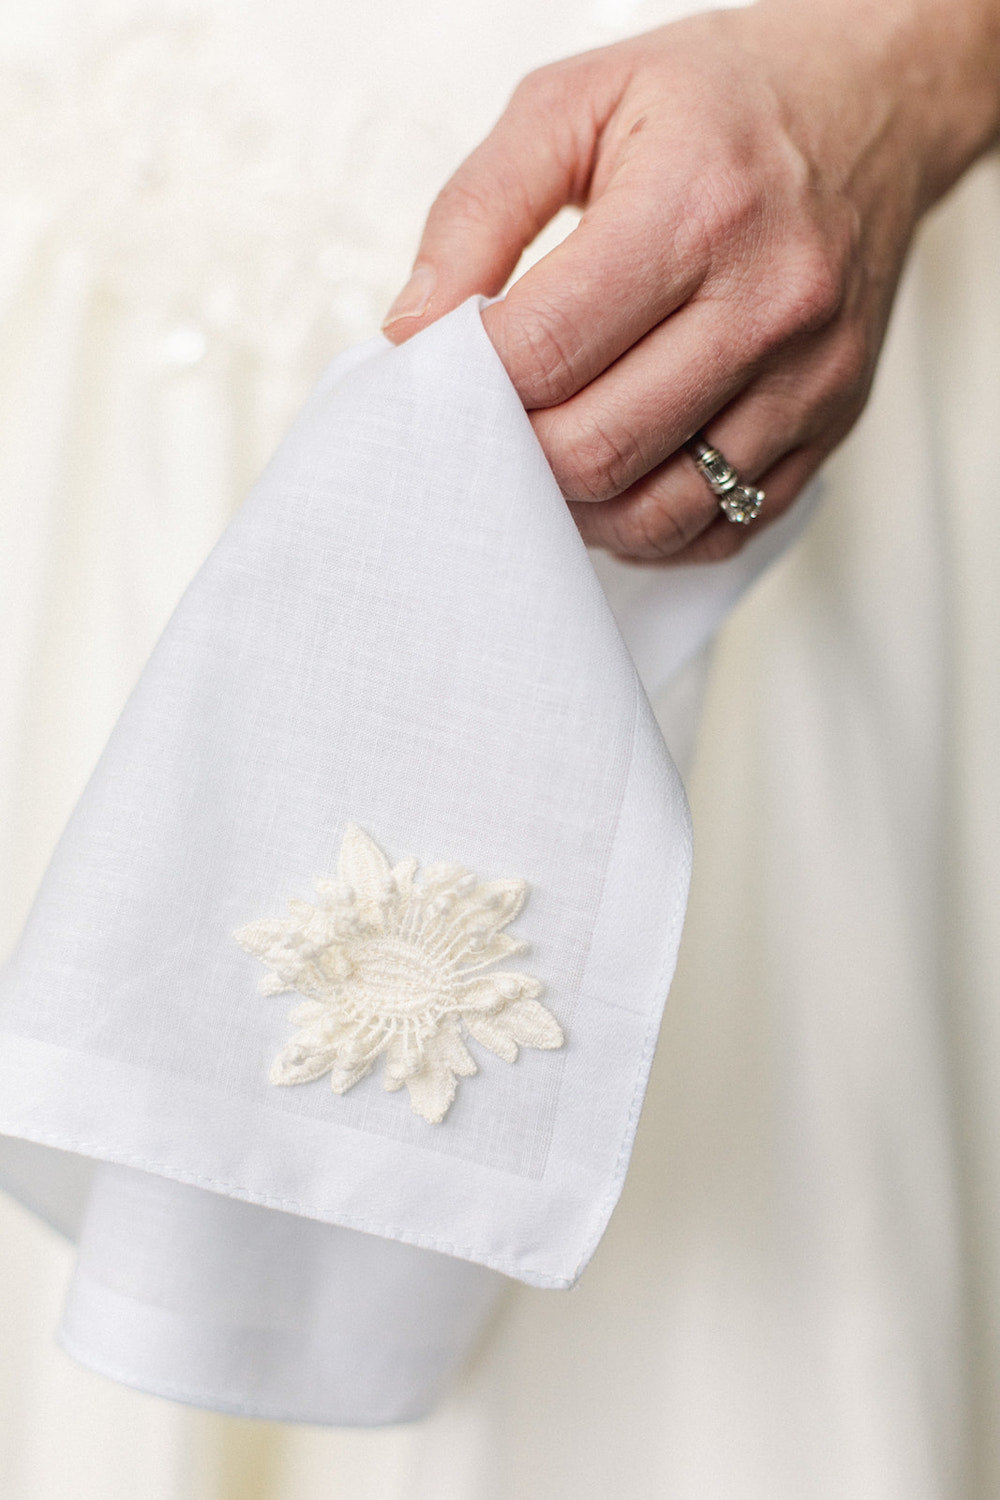 Custom wedding hanky made from mother's wedding dress, bridal bouquet alternative by The Garter Girl